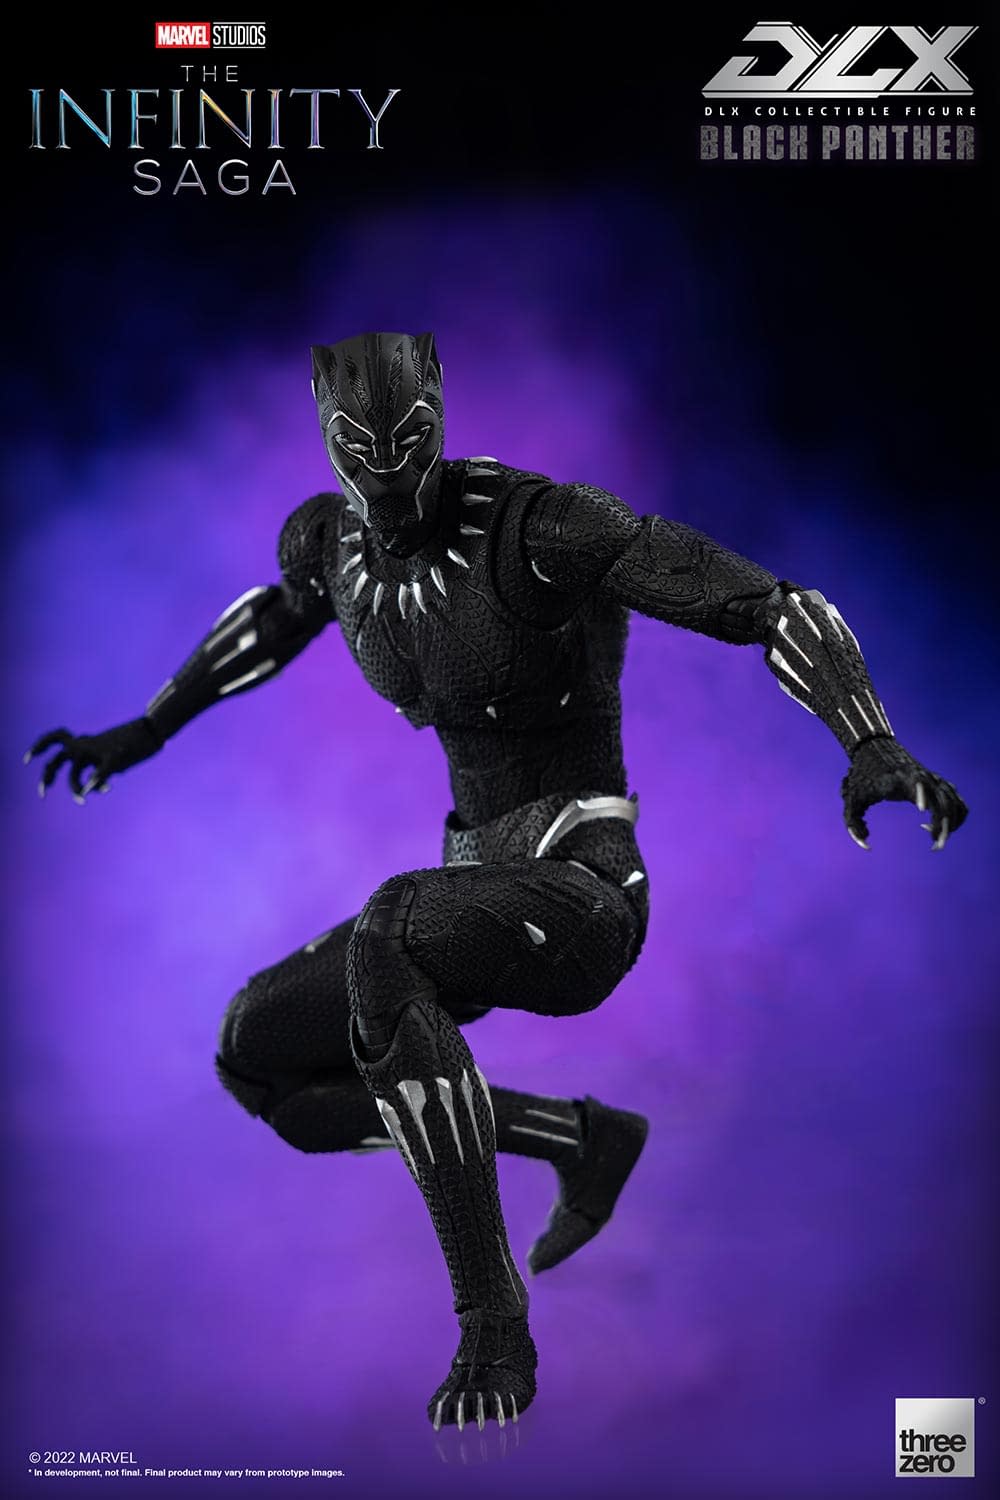 Black Panther Joins threezero's The Infinity Saga DLX Line 